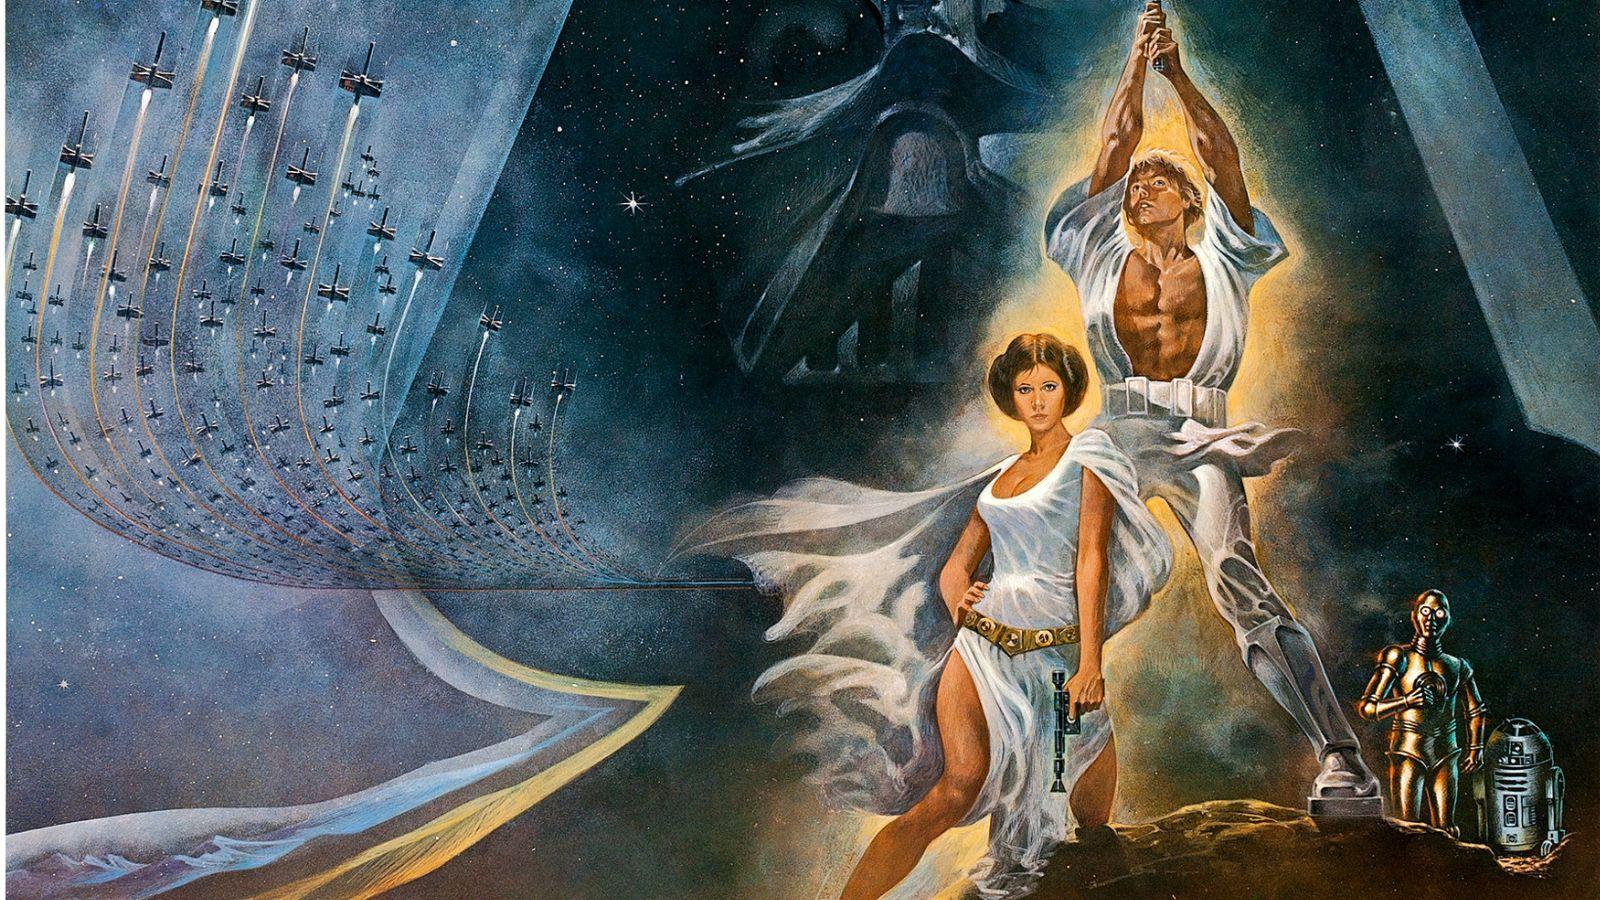 The Star Wars A New Hope poster. Luke Skywalker raises his lightsaber in the air.